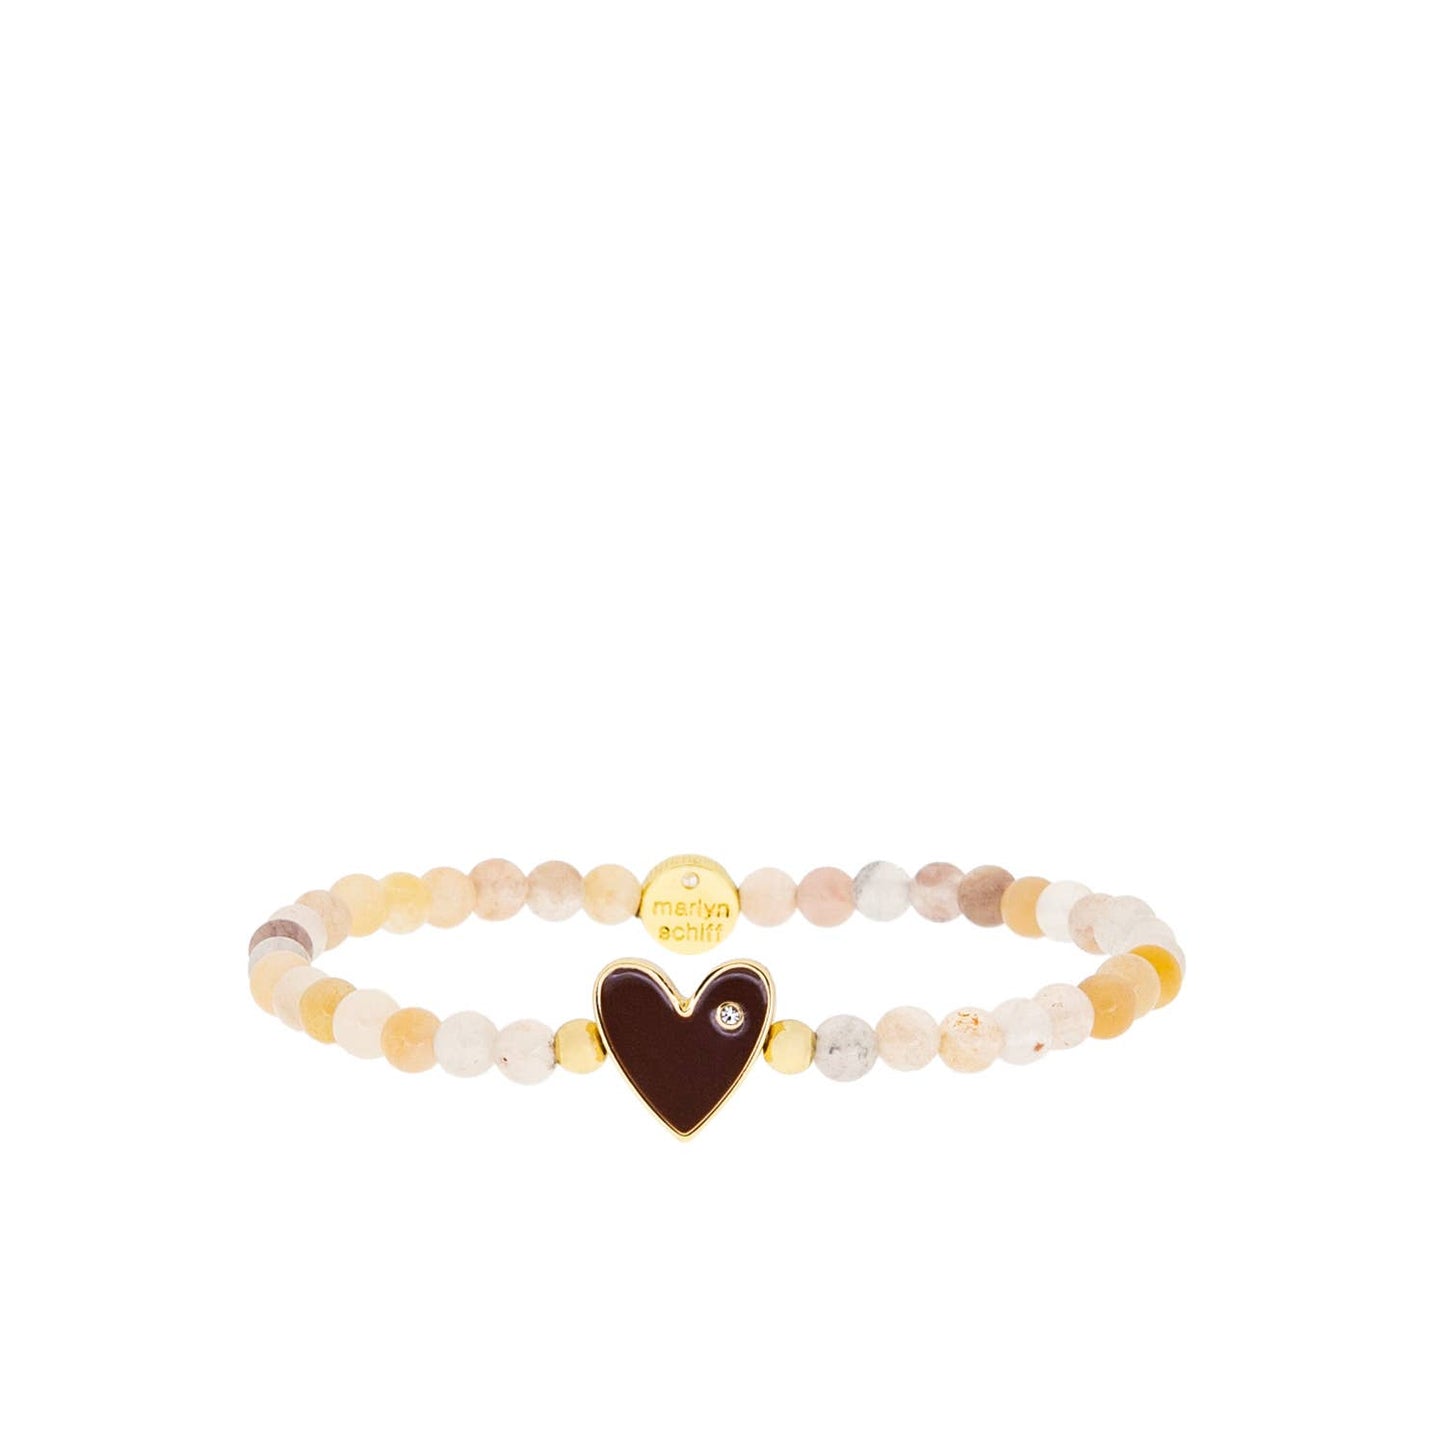 semi precious stone bracelet with heart: Gold-labradorite